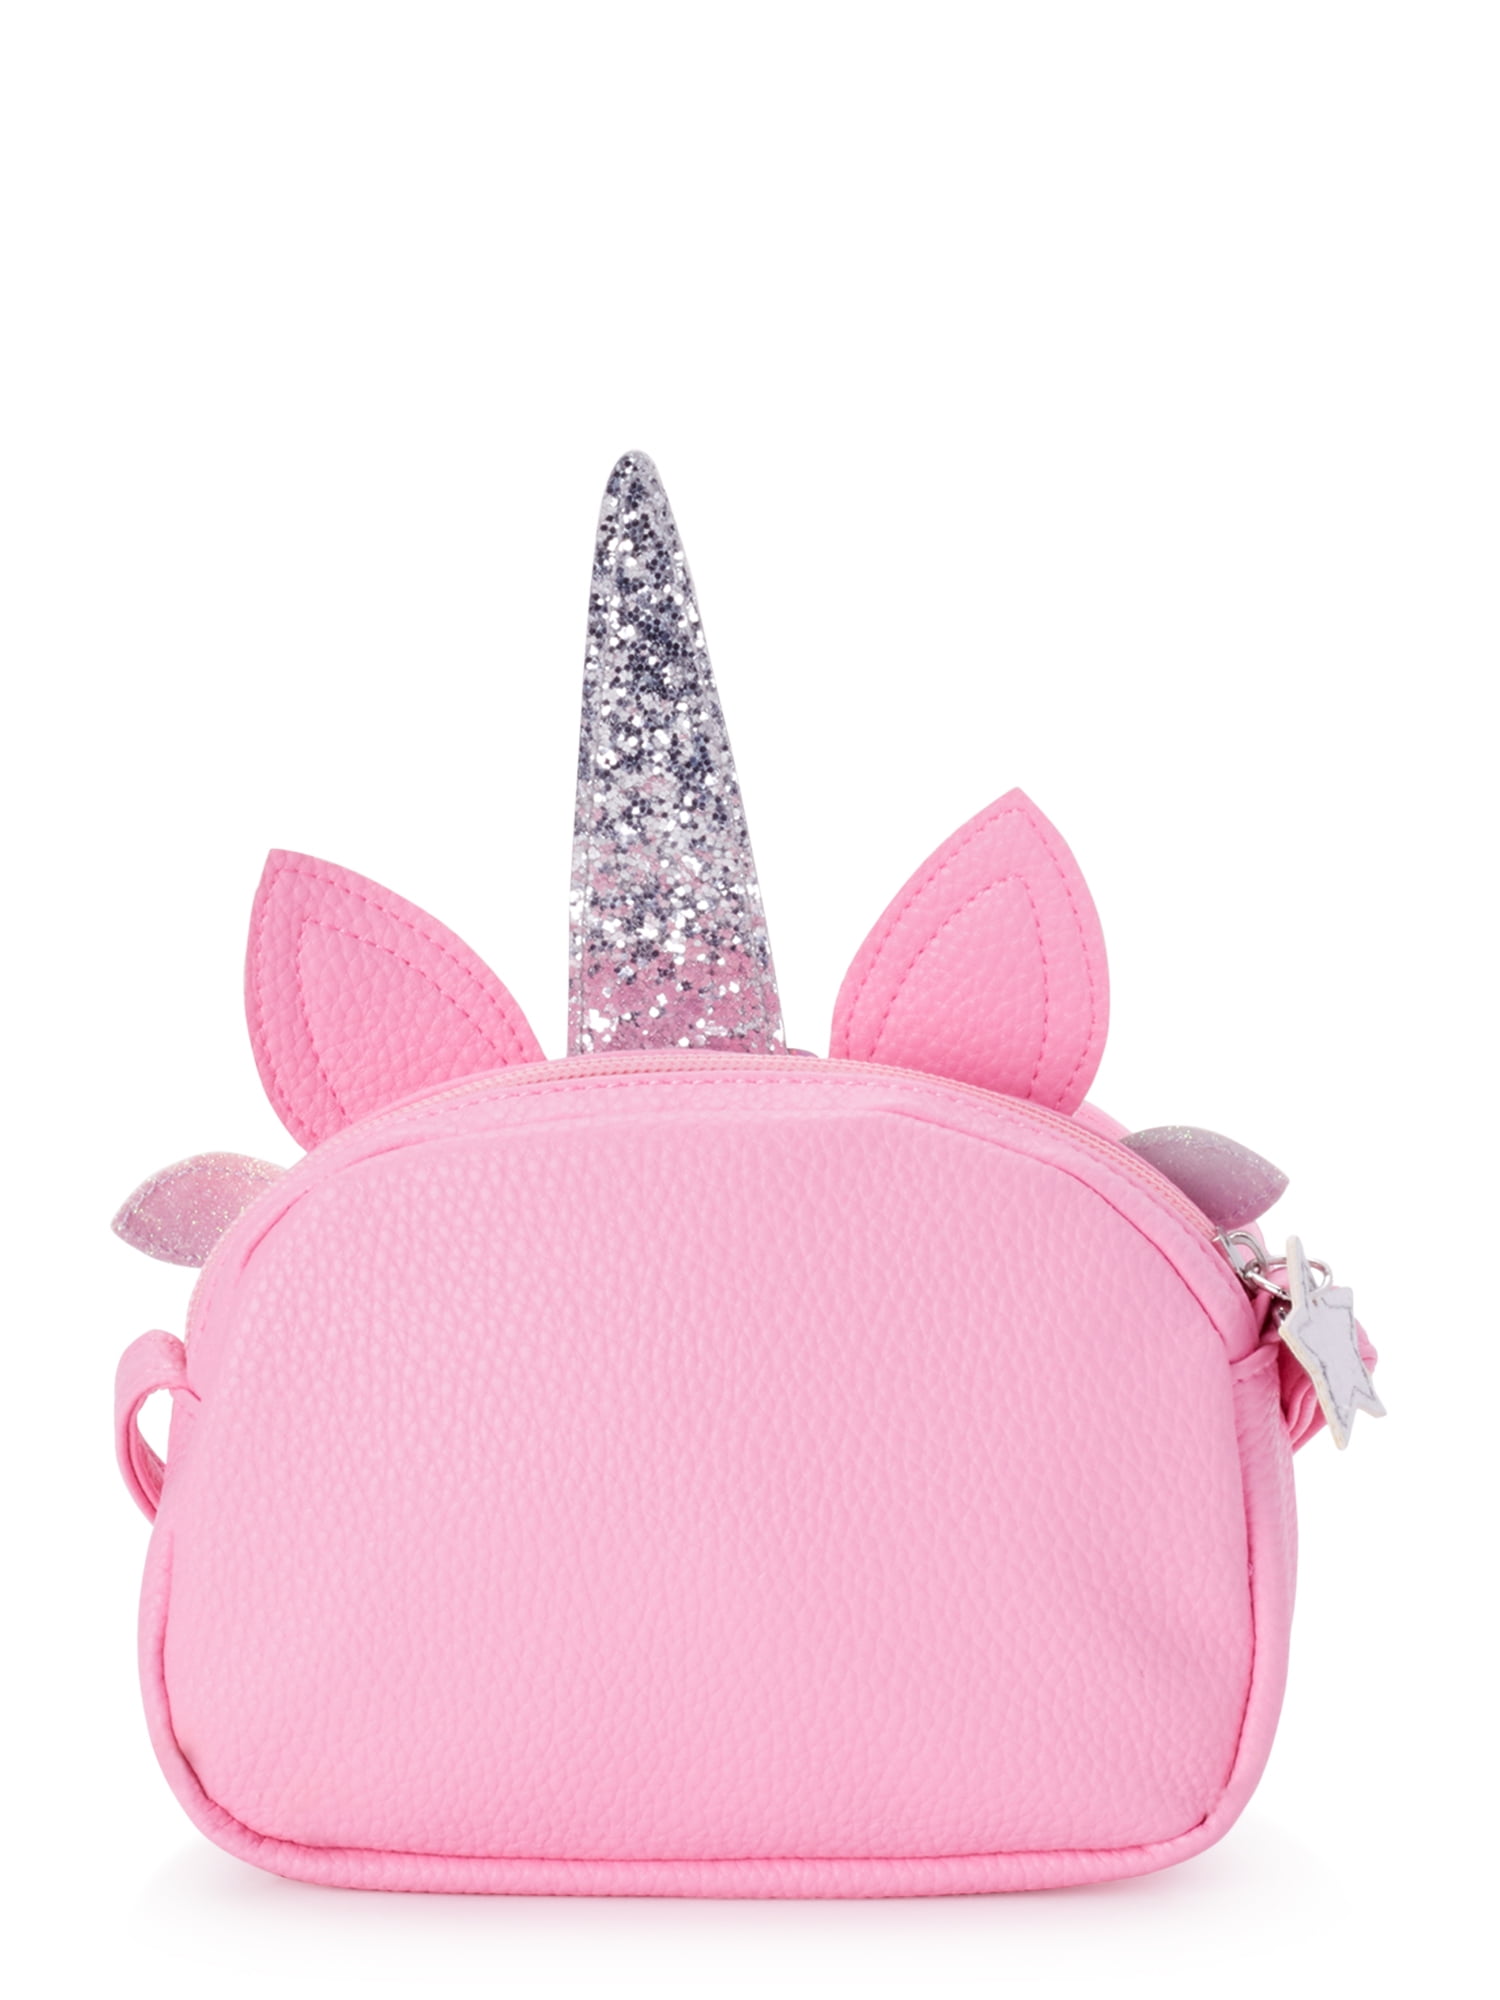 BAGISM Unicorn Printed Picnic Bag For Kids 15 L Backpack Baby Pink - Price  in India | Flipkart.com